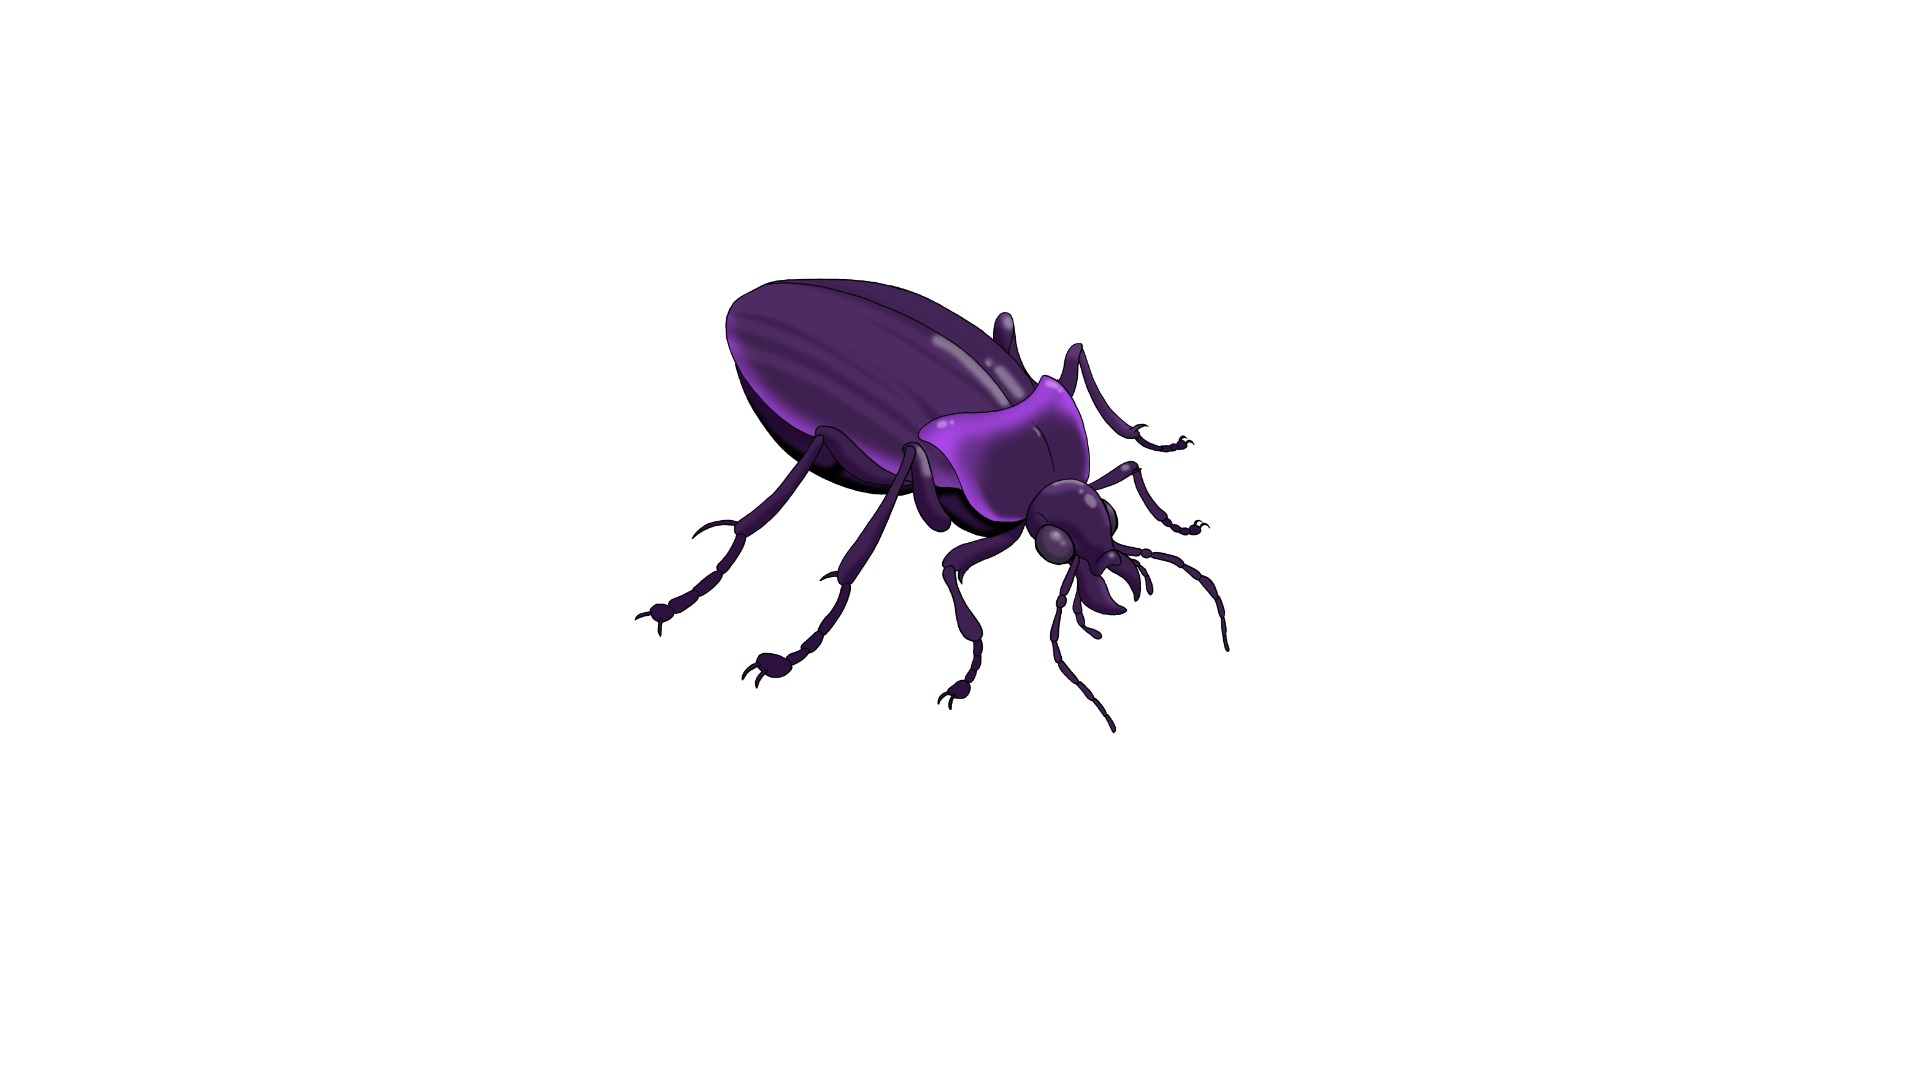 Violet ground beetle